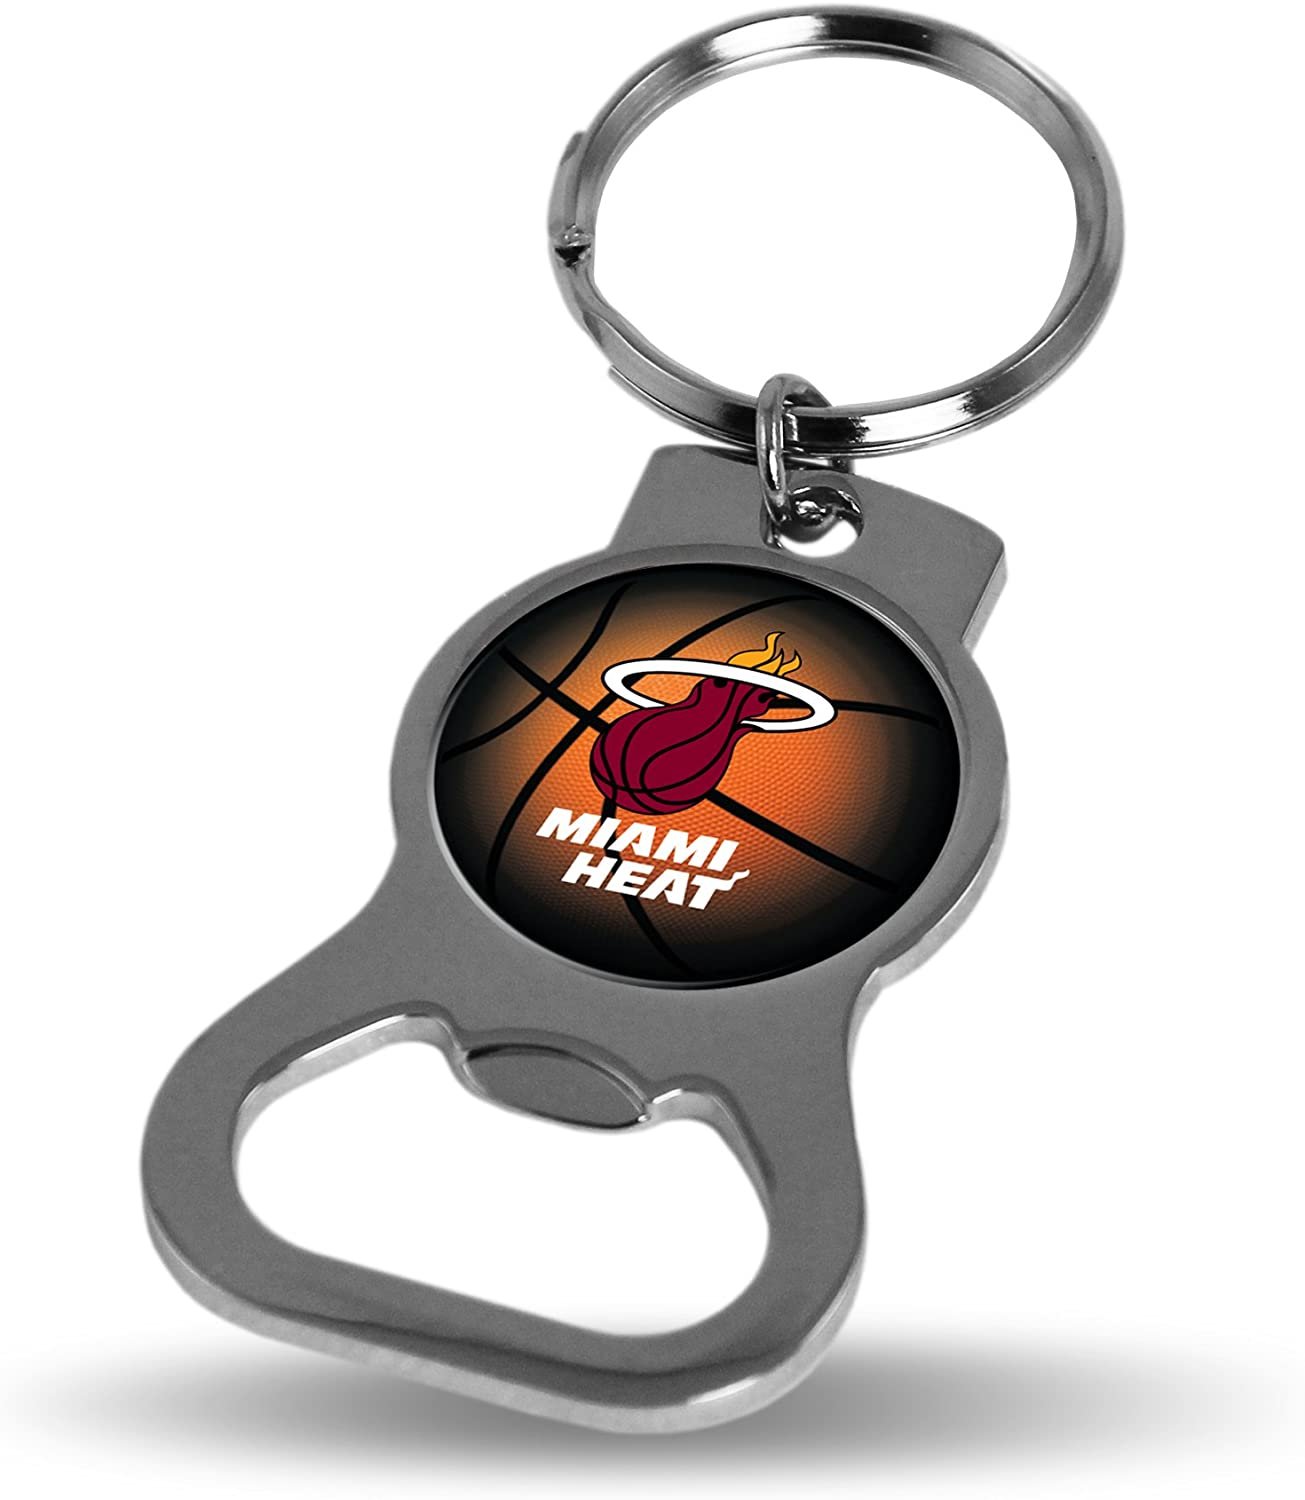 Miami Heat Premium Solid Metal Bottle Opener Keychain, Silver Key Ring, Team Logo